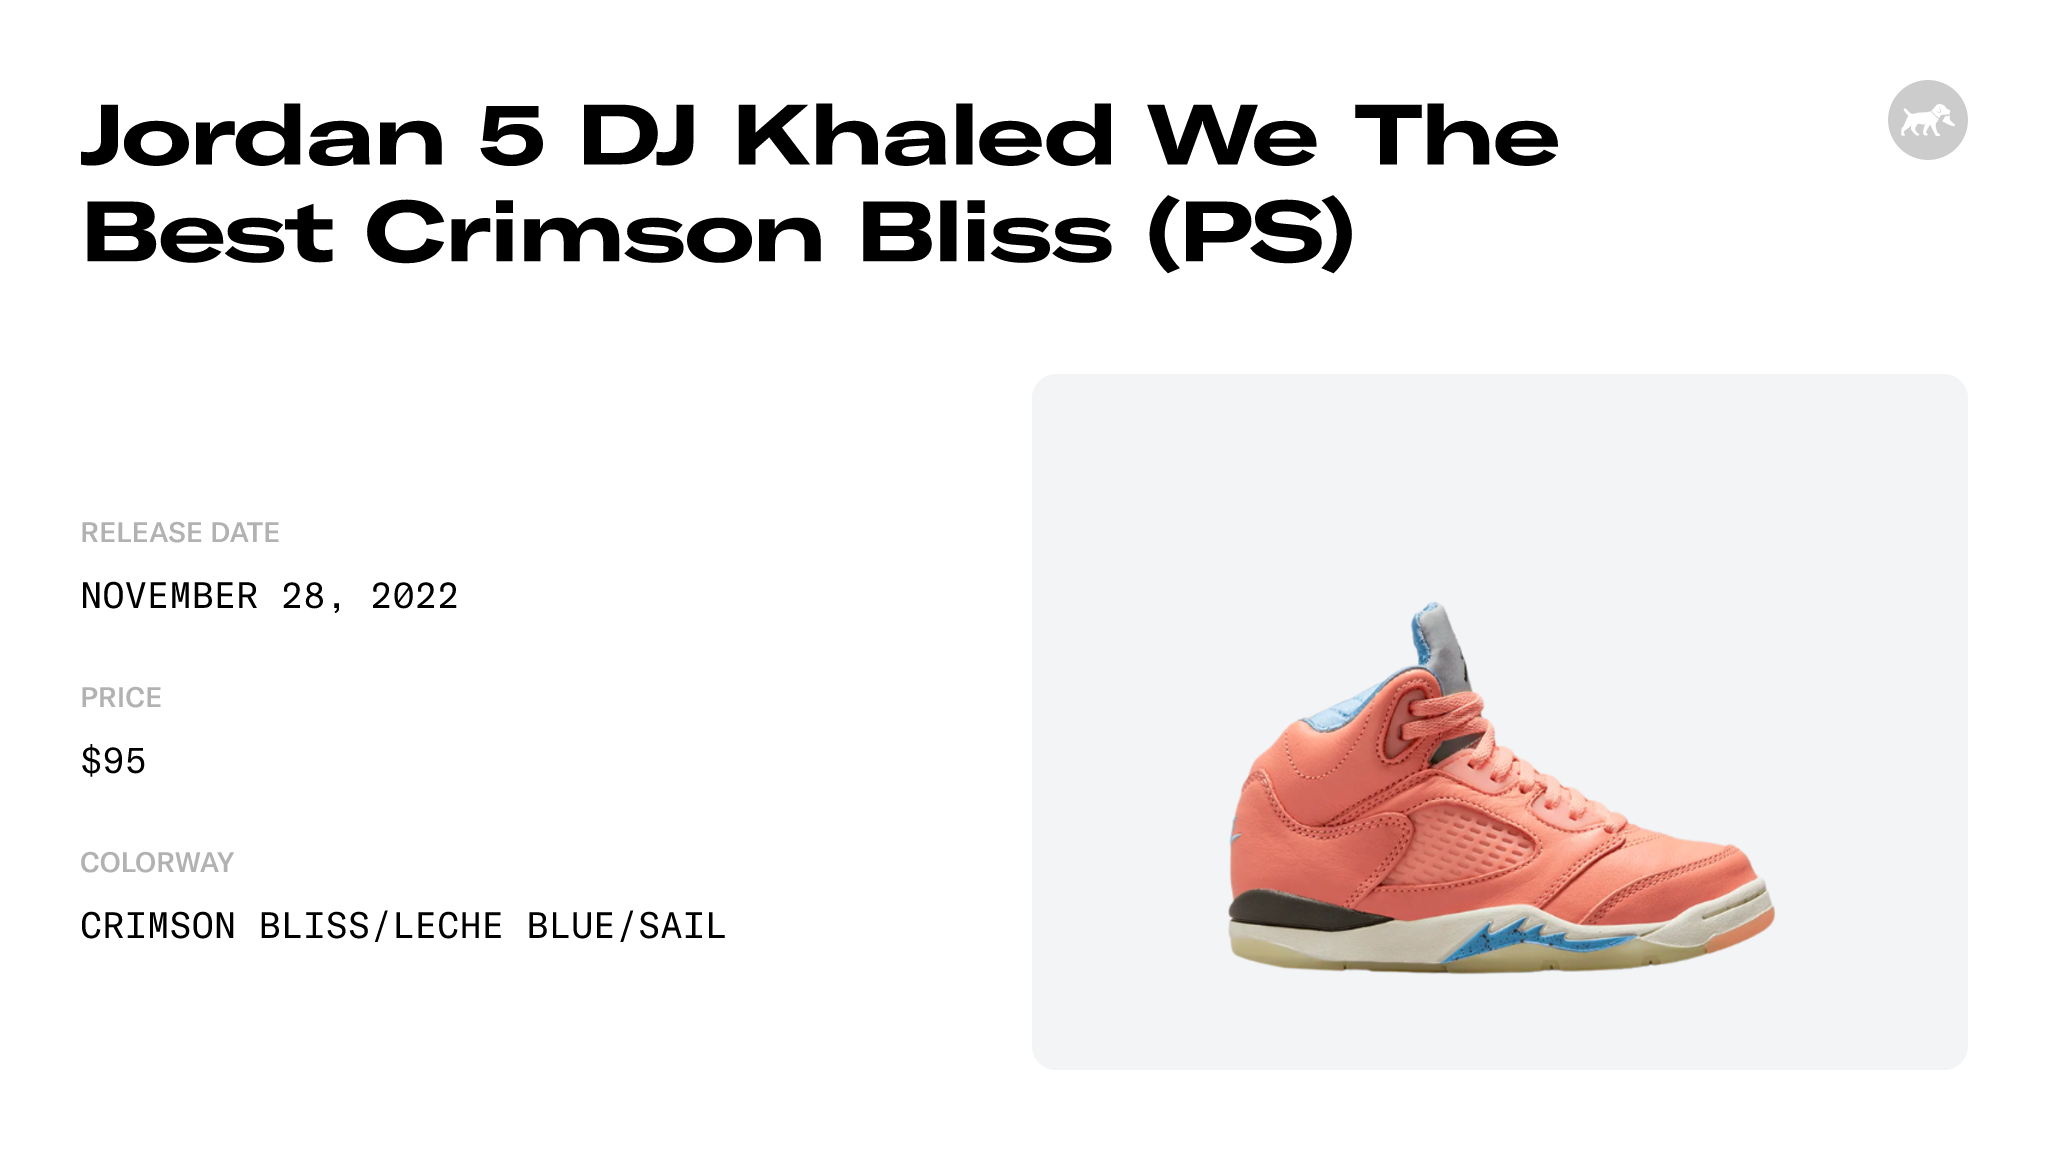 DJ Khaled X Air Jordan 5 Retro 'We The Best Crimson Bliss' - Air Jordan -  DV4982 641 - crimson bliss/leche blue/sail